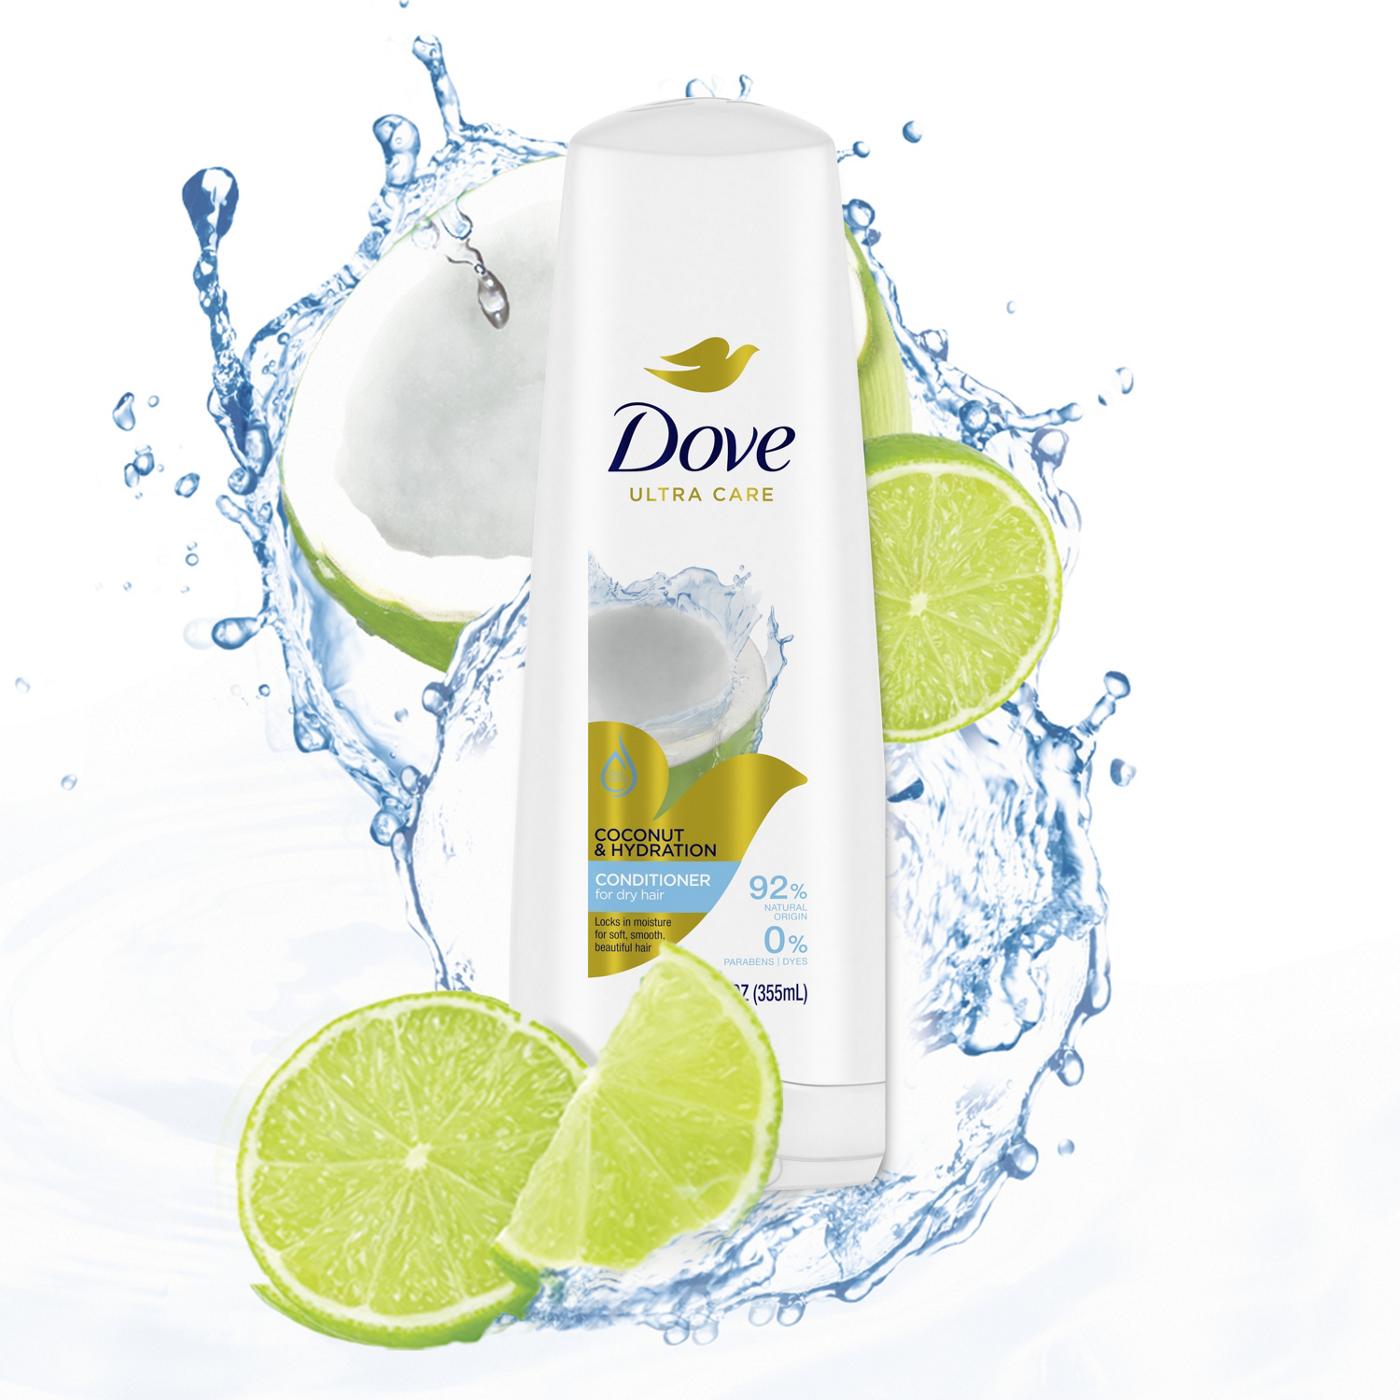 Dove Ultra Care Conditioner - Coconut & Hydration; image 6 of 11